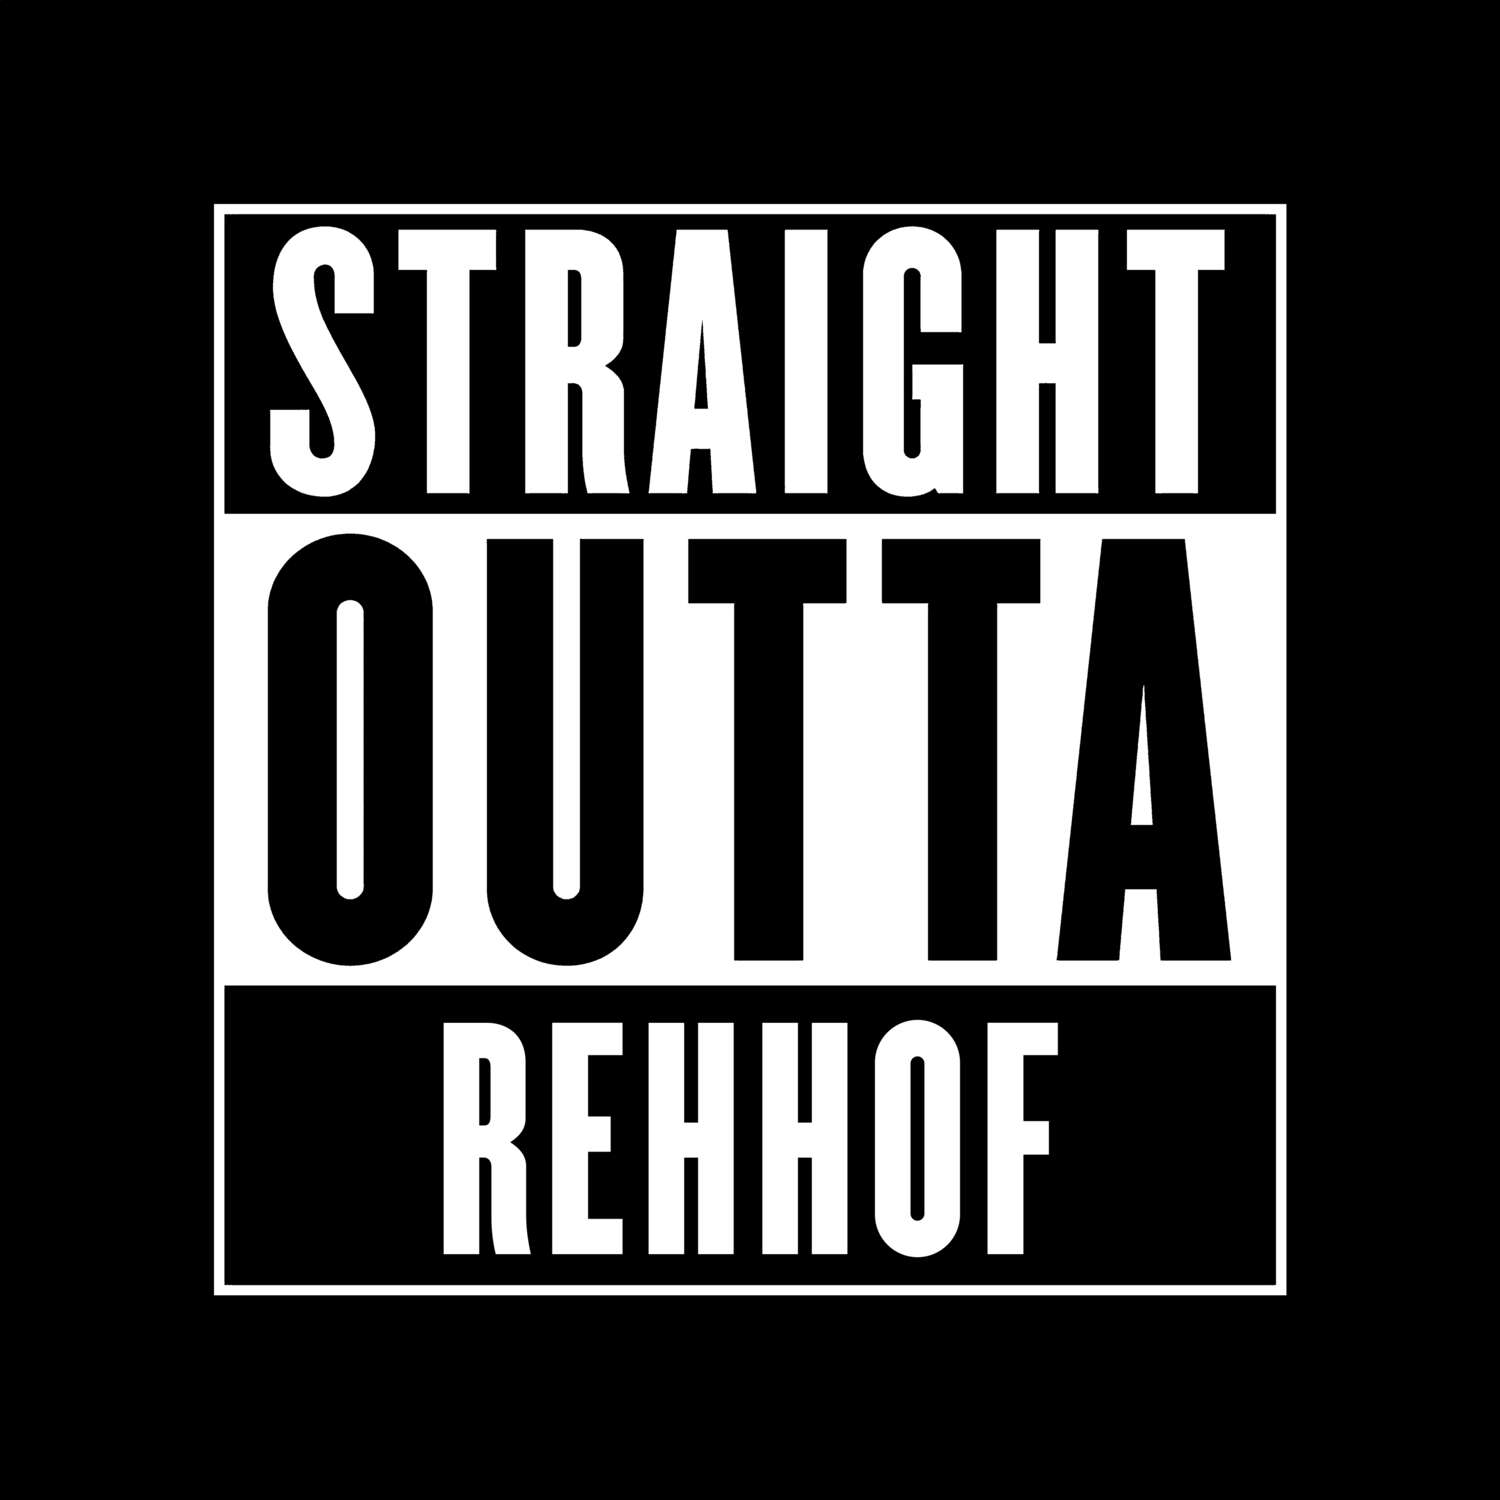 Rehhof T-Shirt »Straight Outta«